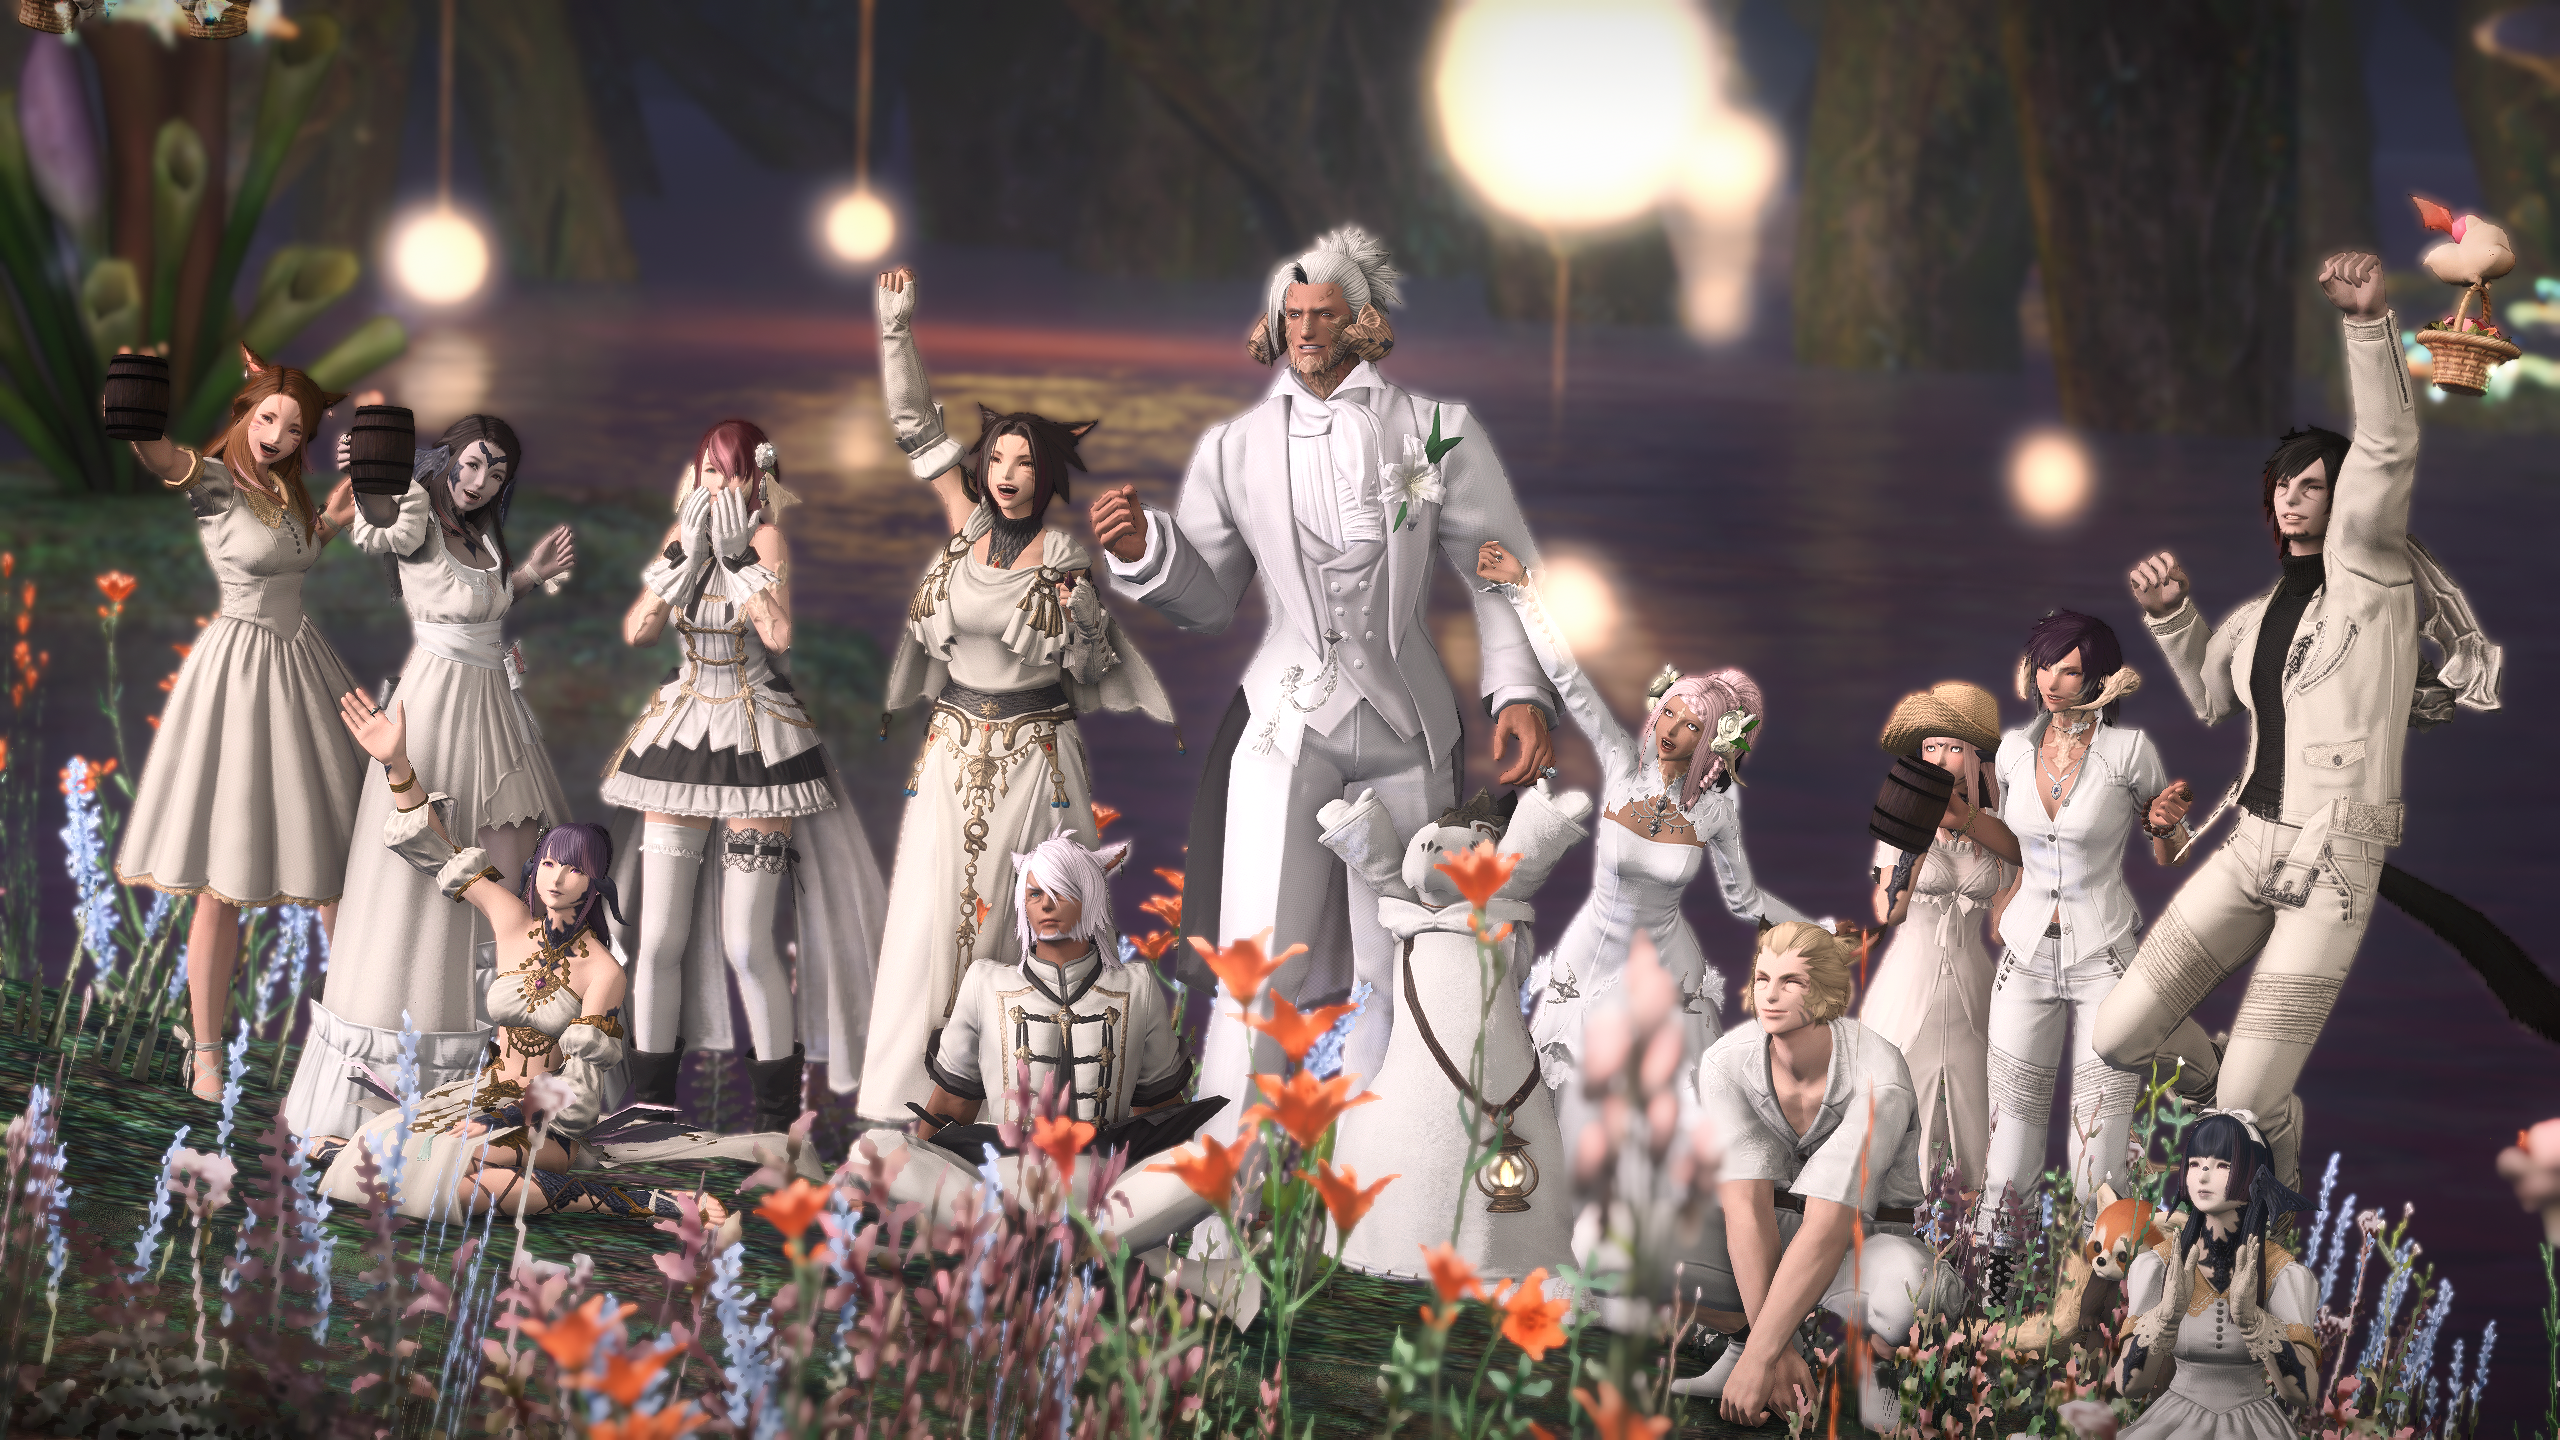 Final Fantasy XiV A Realm Reborn Reshade Weddings White ONyx CGi Video Game Characters Wedding Dress 2560x1440